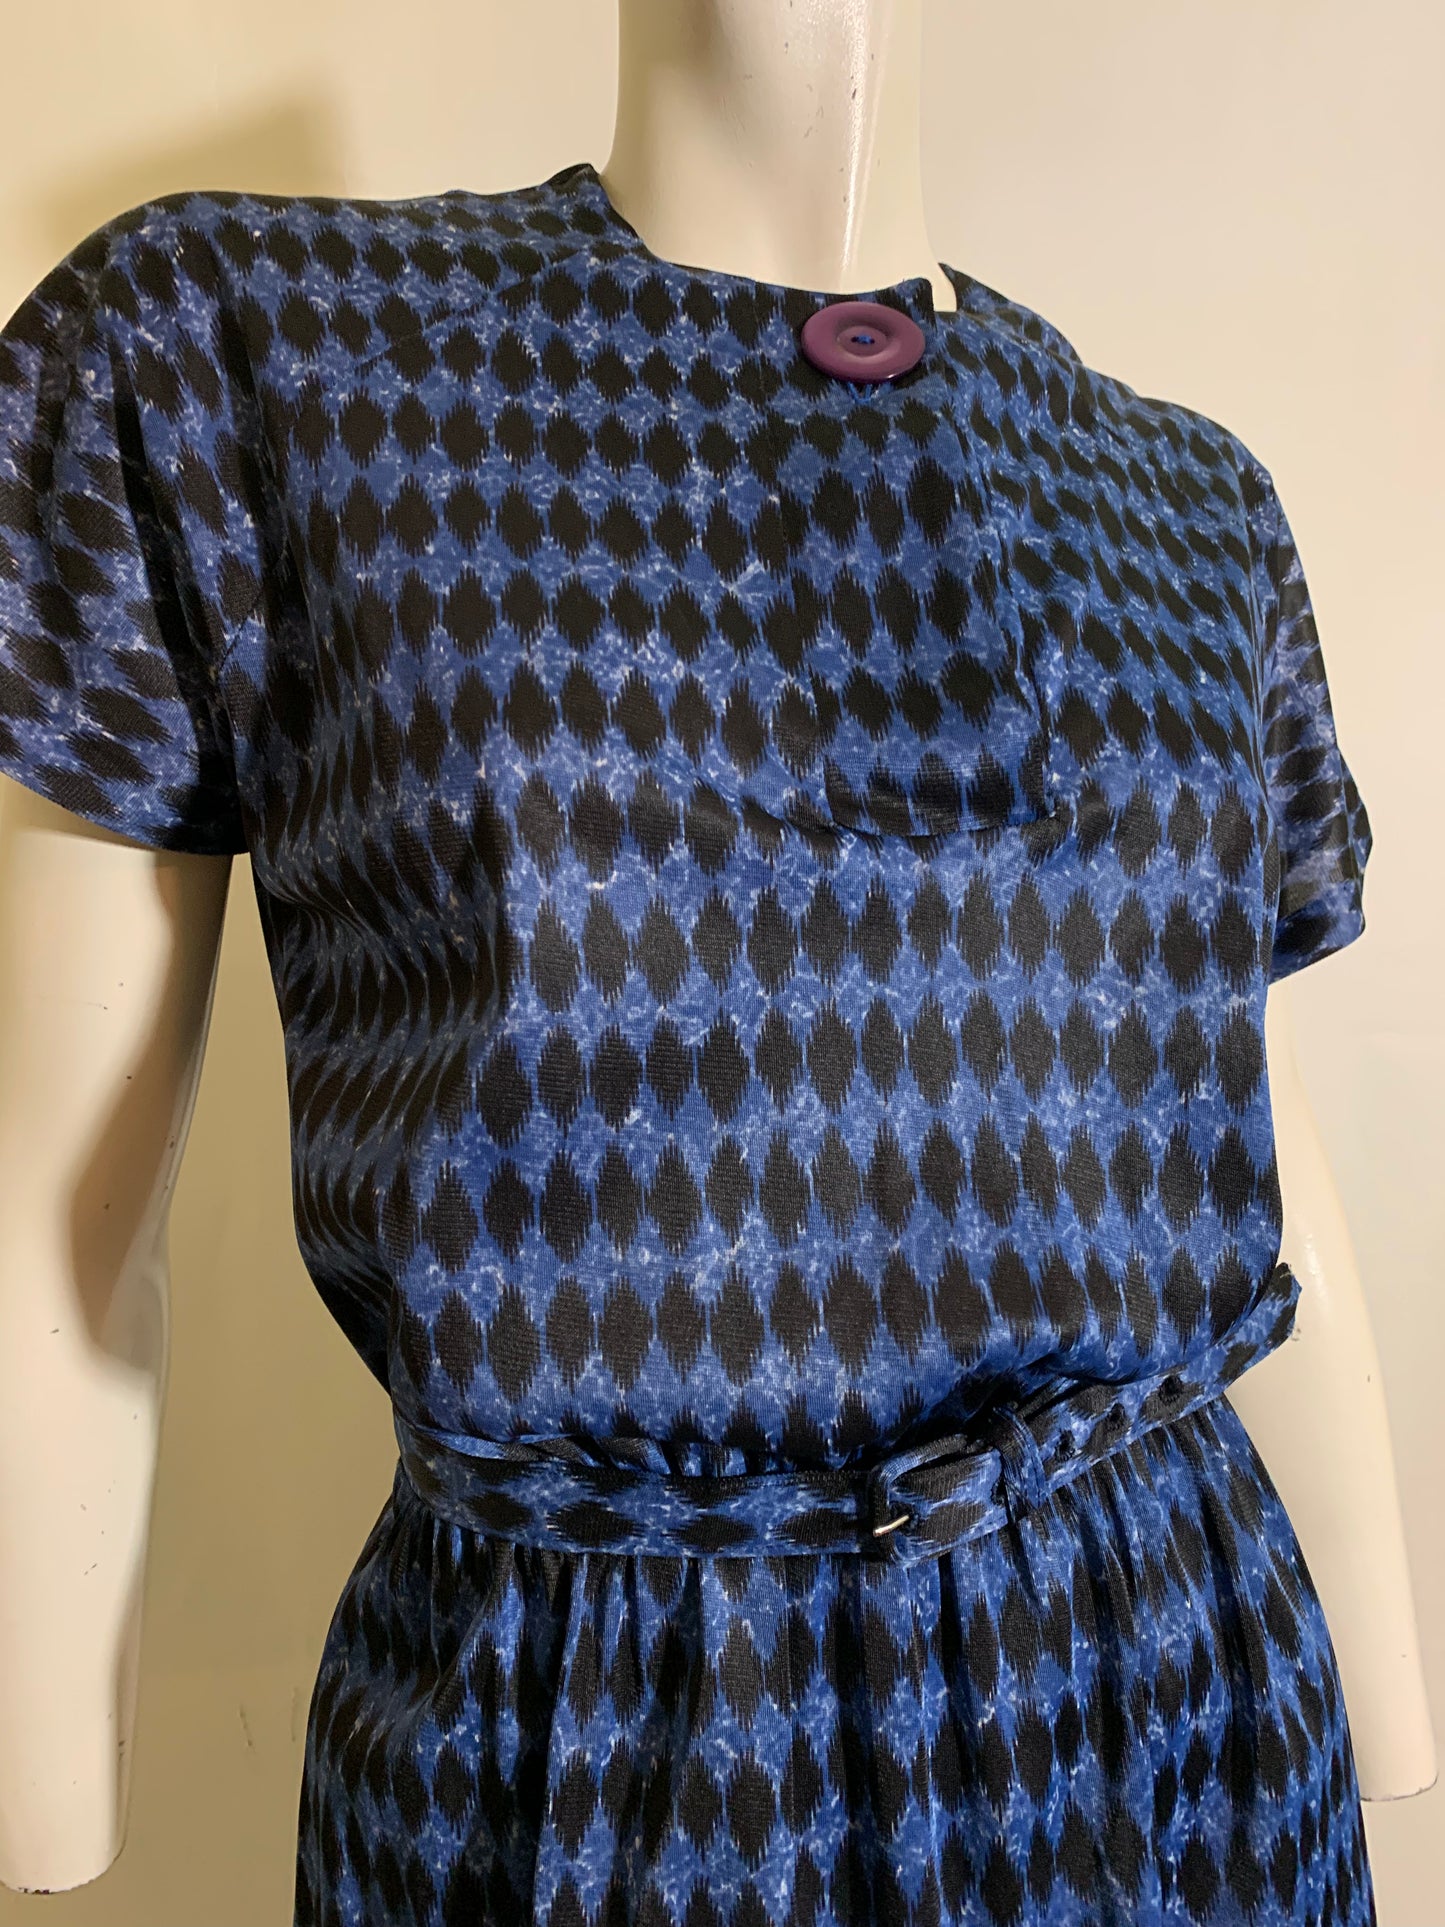 Harlequin Black and Blue Print Jersey Nylon Dress circa 1960s